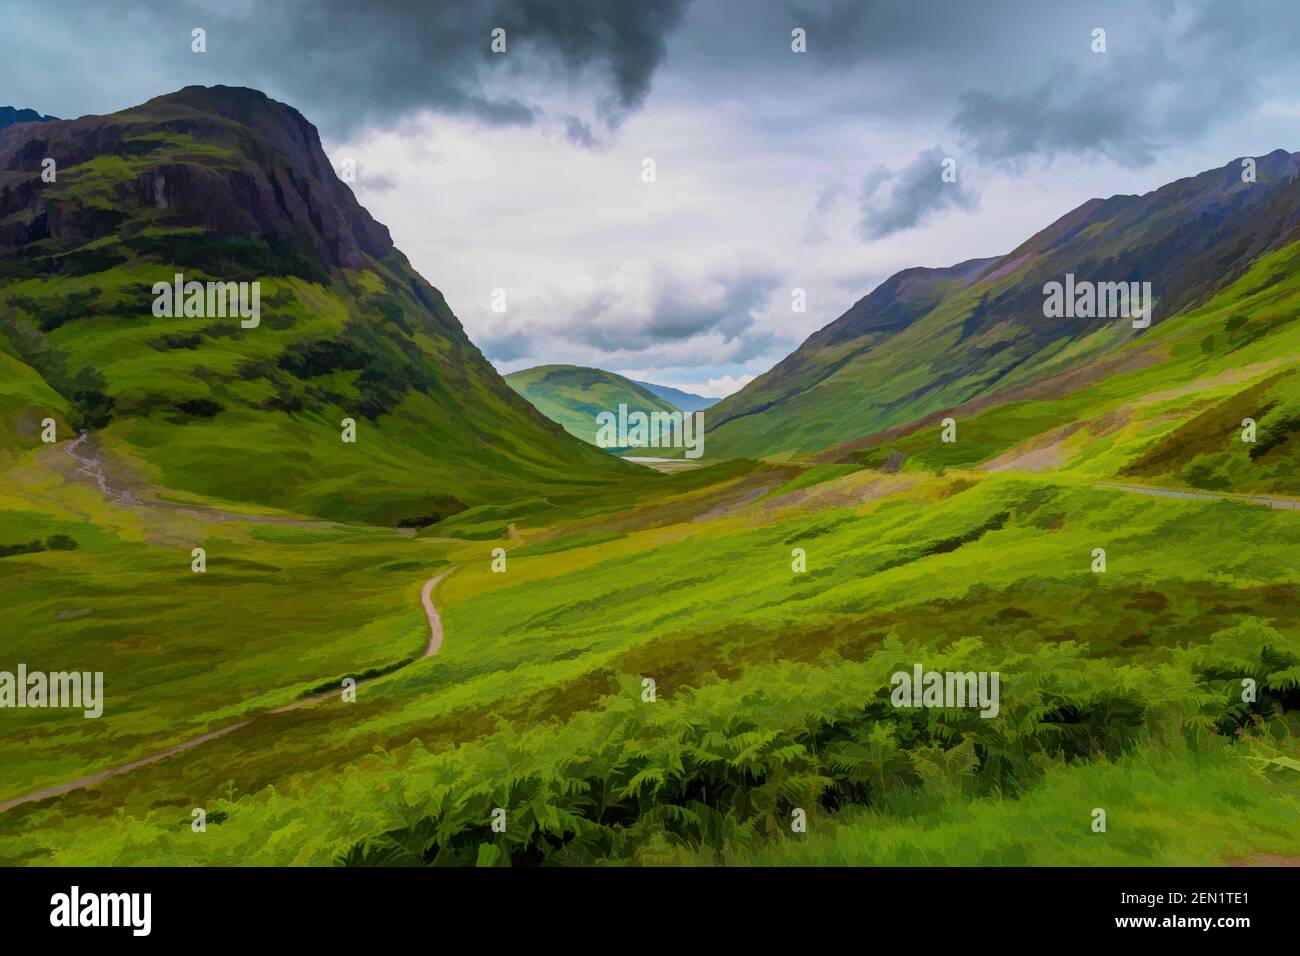 Digital painting of the Three Sisters mountains, Glencoe, Scotland Stock Photo